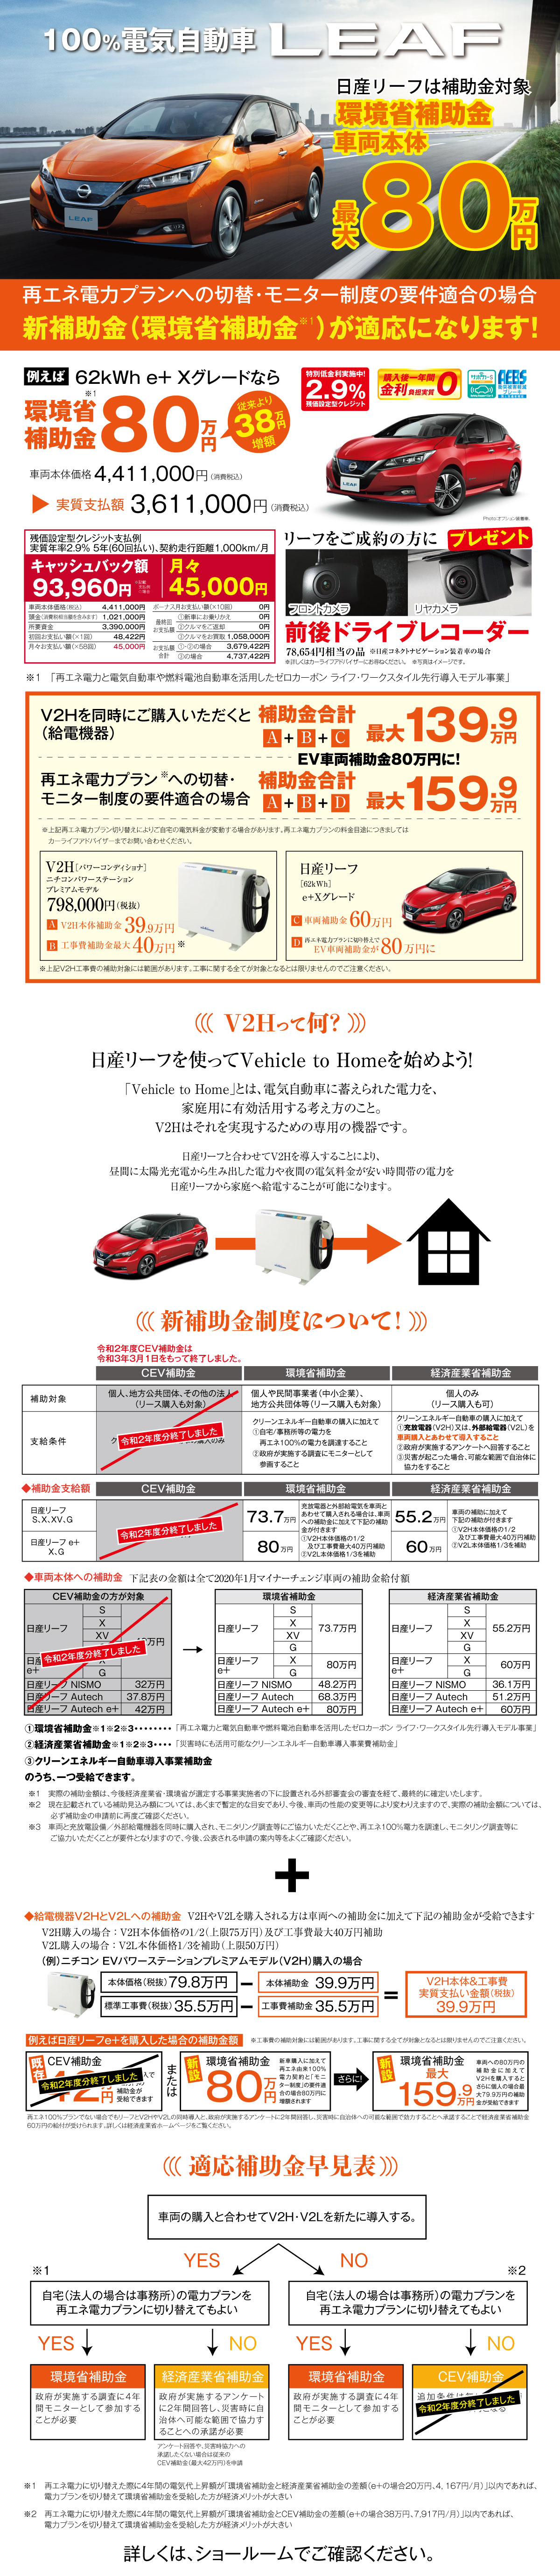 茨城日産自動車株式会社 リーフは補助金対象最大80万円